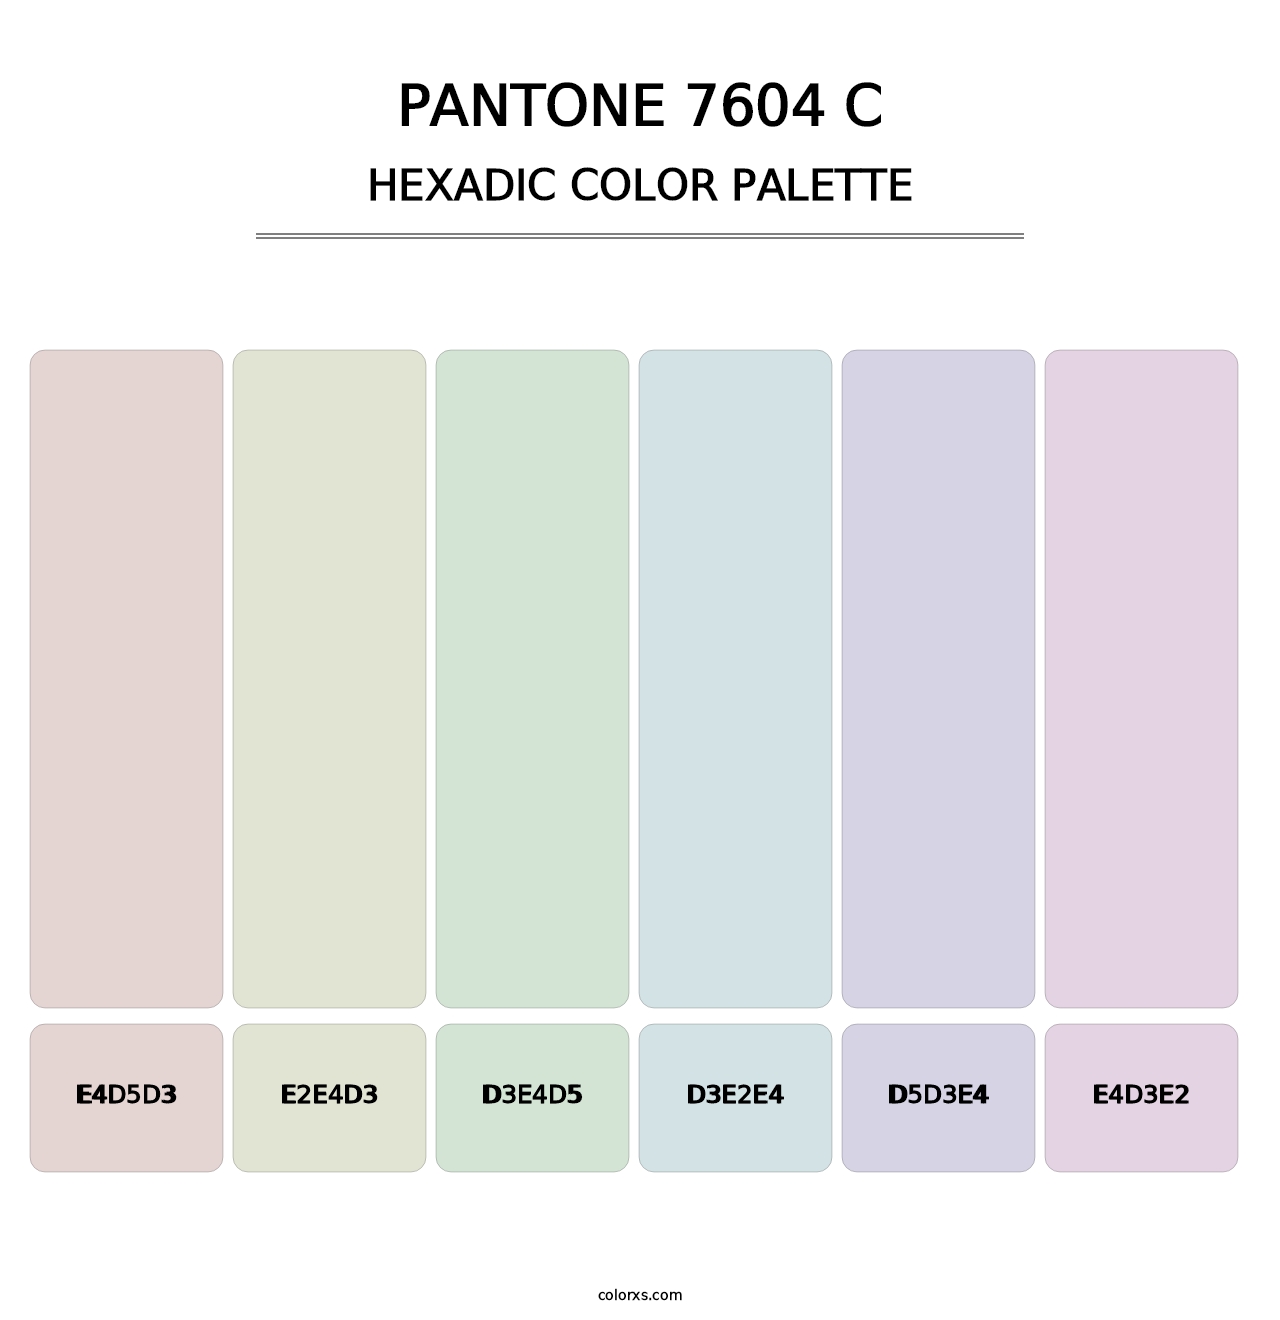 PANTONE 7604 C - Hexadic Color Palette